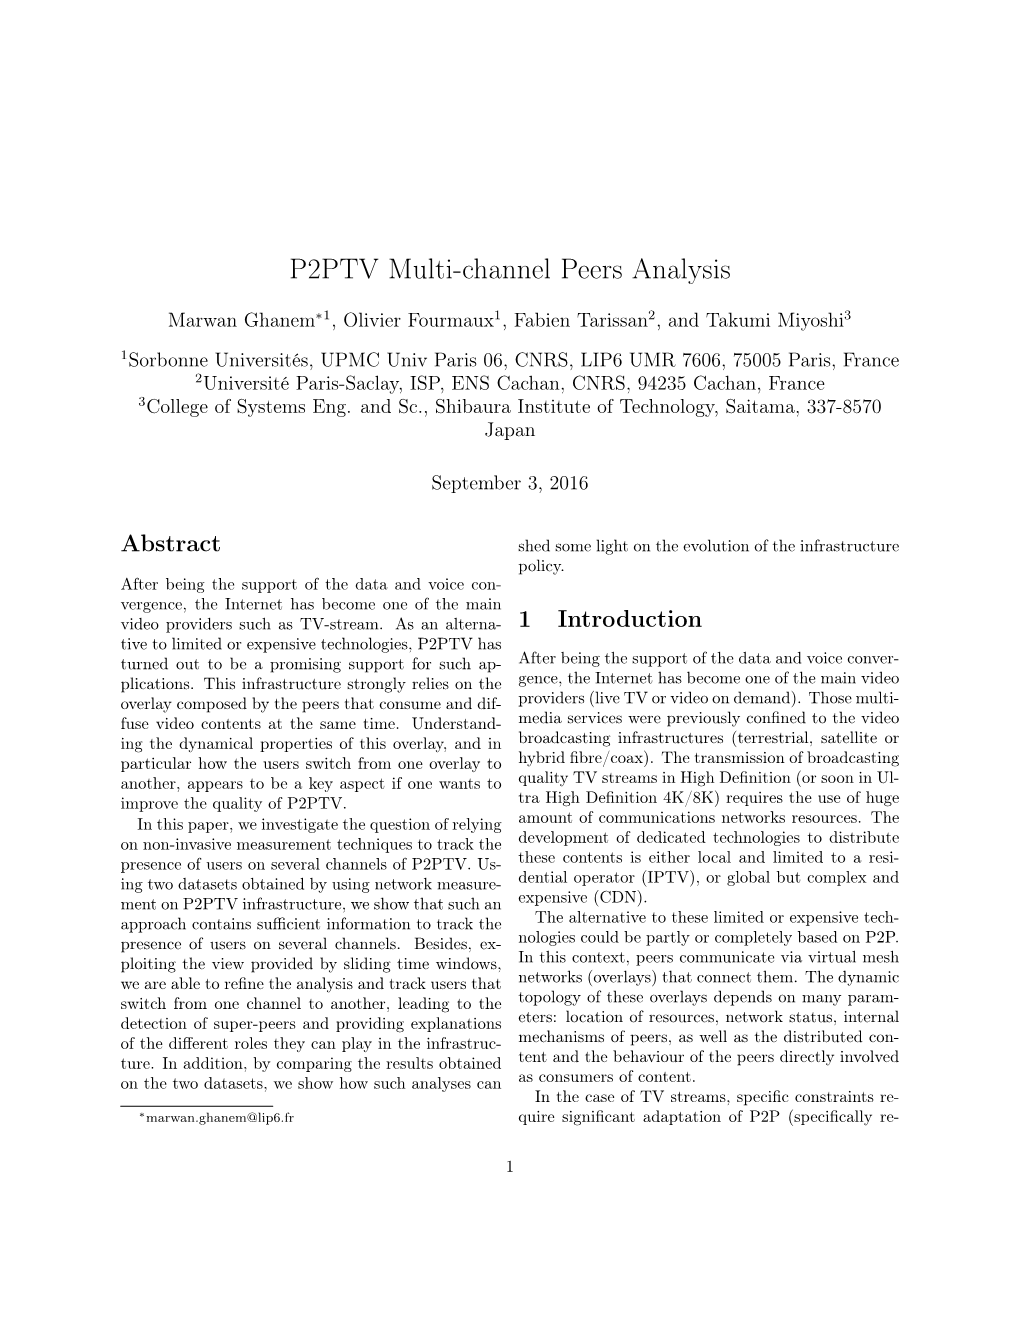 P2PTV Multi-Channel Peers Analysis